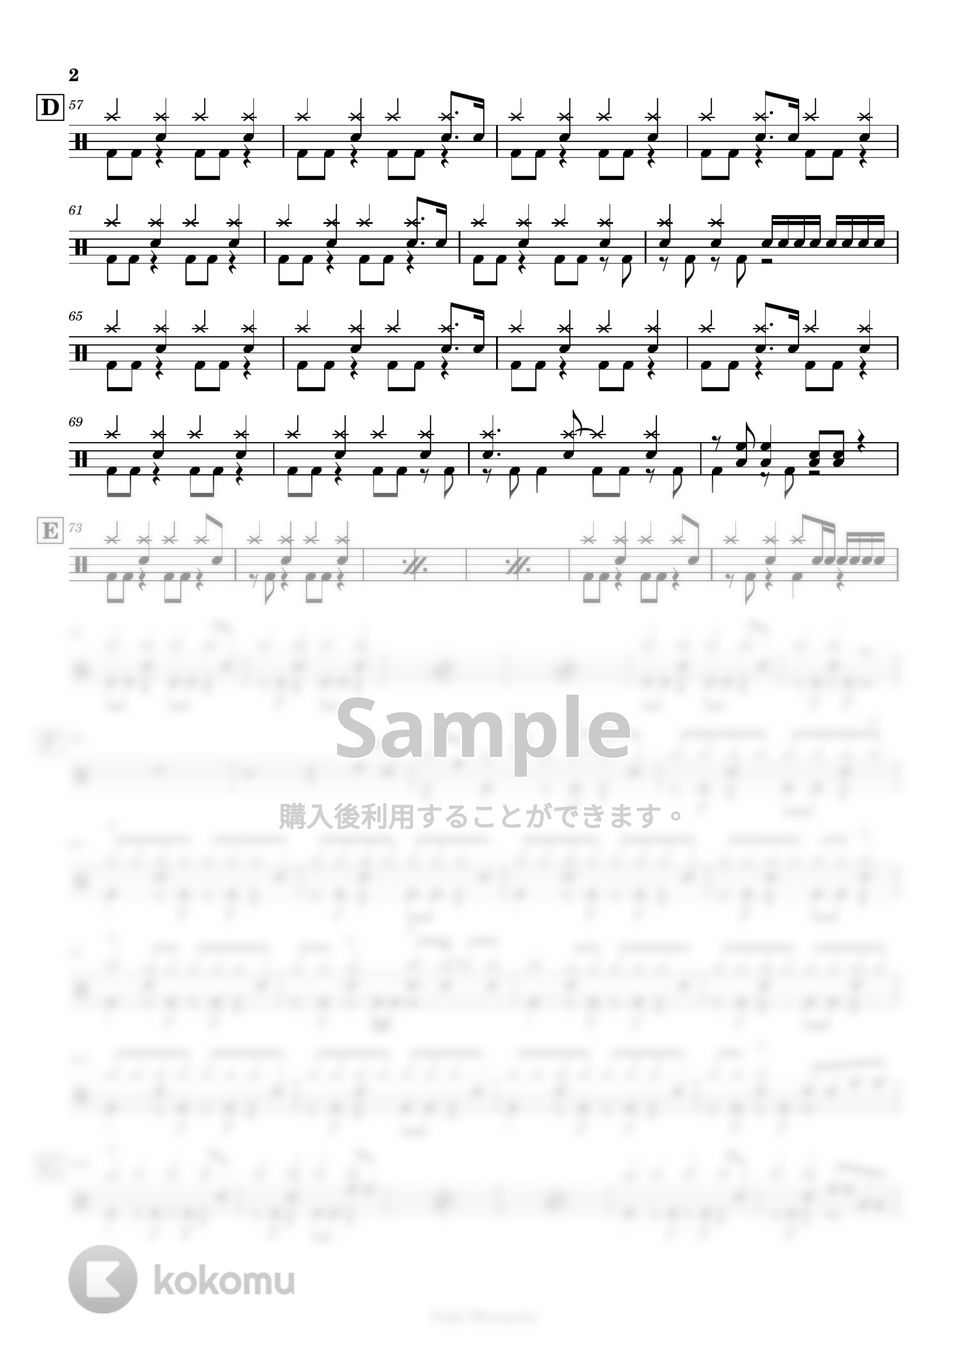 ONE OK ROCK - 【ドラム譜】完全感覚Dreamer【完コピ】 by Taiki Mizumoto